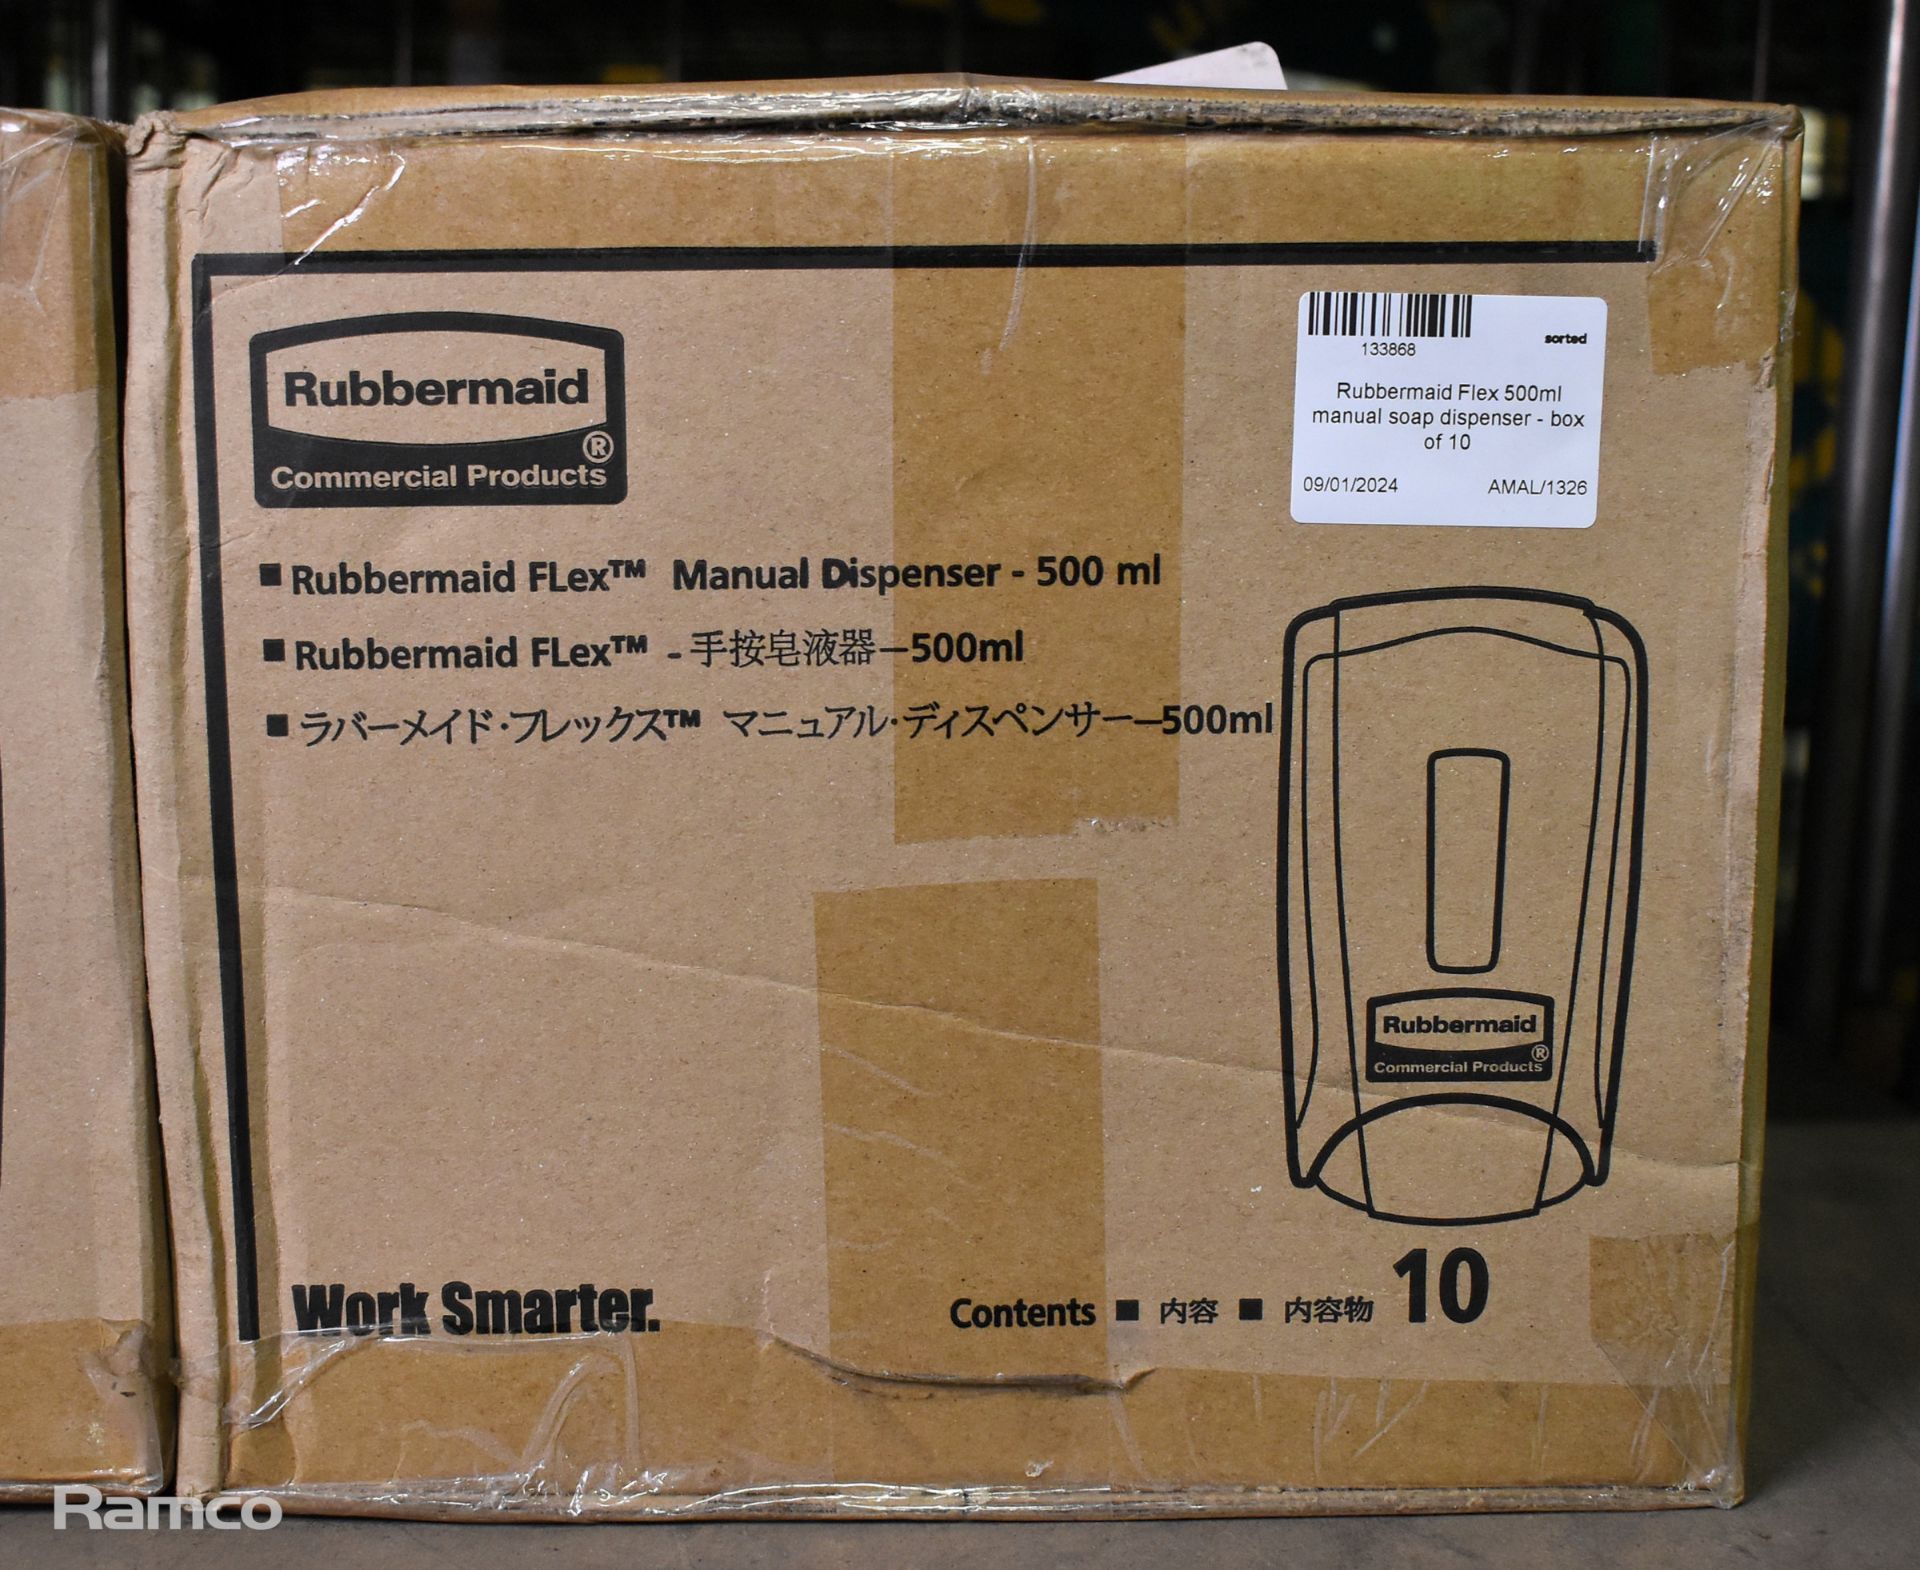 2x boxes of Rubbermaid Flex 500ml manual soap dispensers - 10 per box - Image 3 of 3